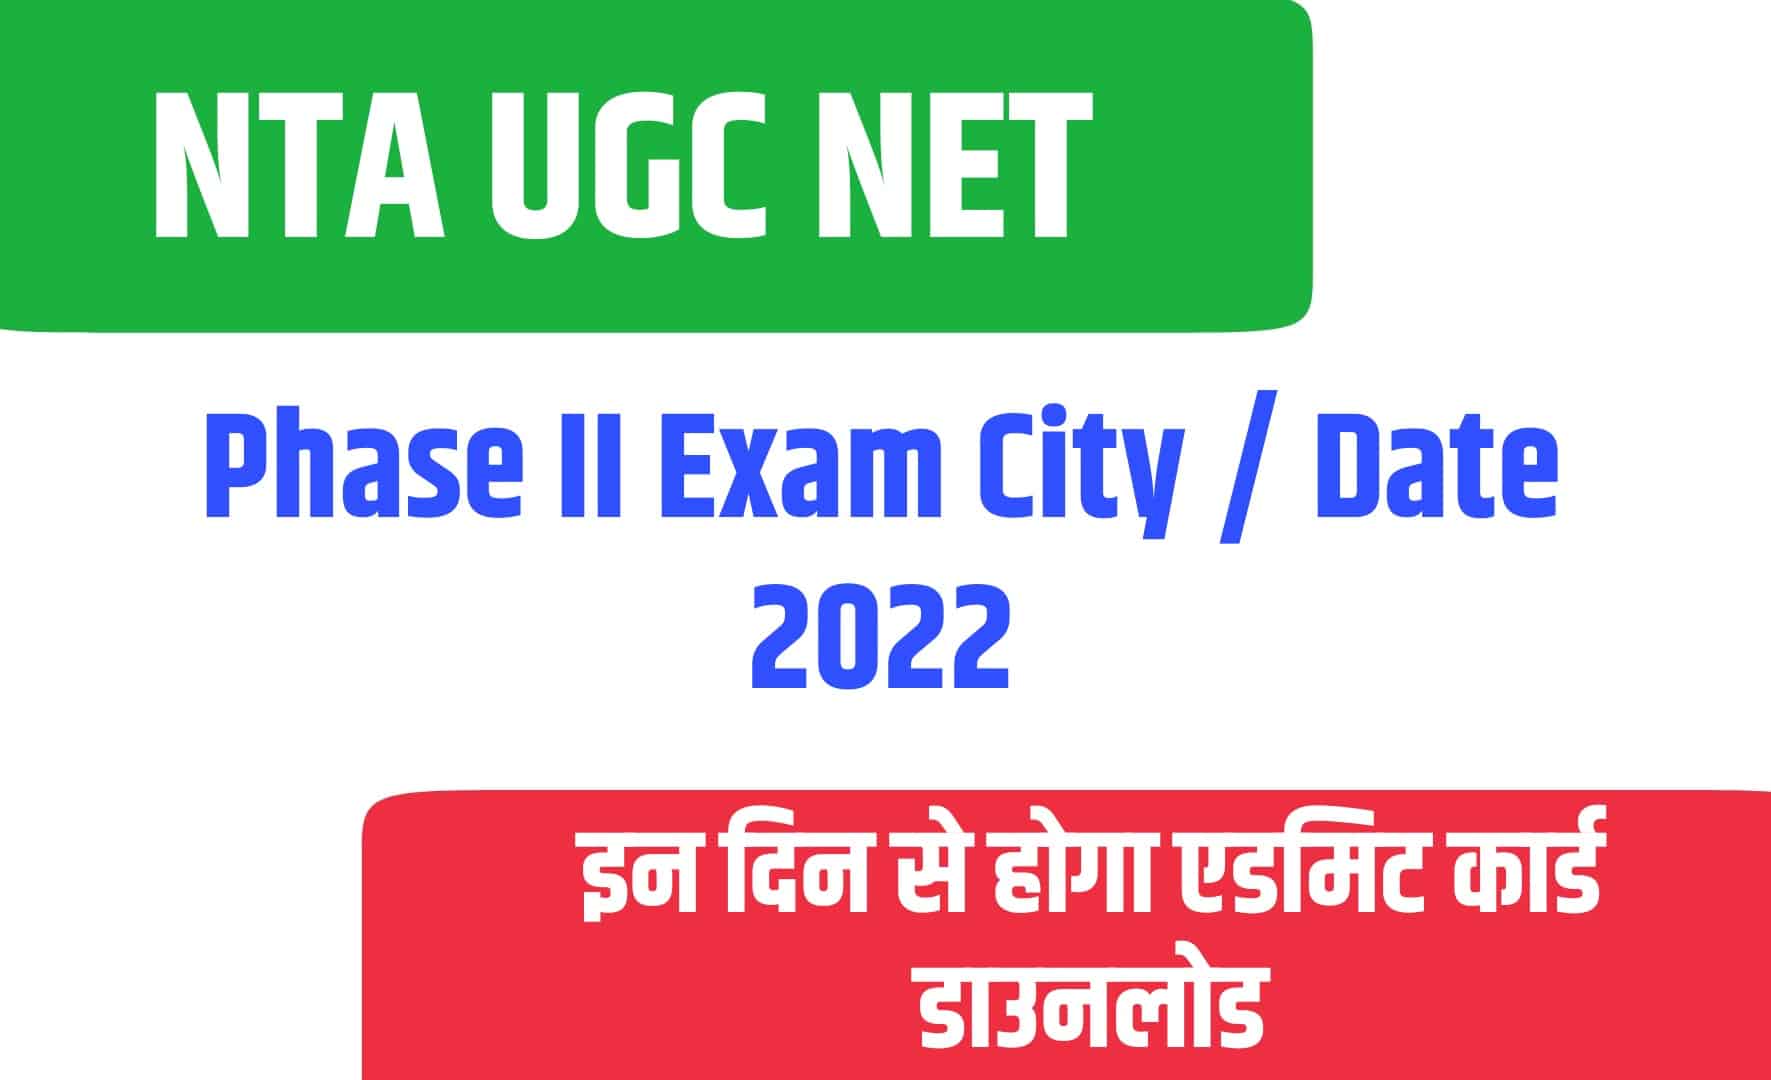 NTA UGC NET Phase II Exam City / Date 2022 | एंटीए UGC NET मेंस परीक्षा शहर विवरण जारी